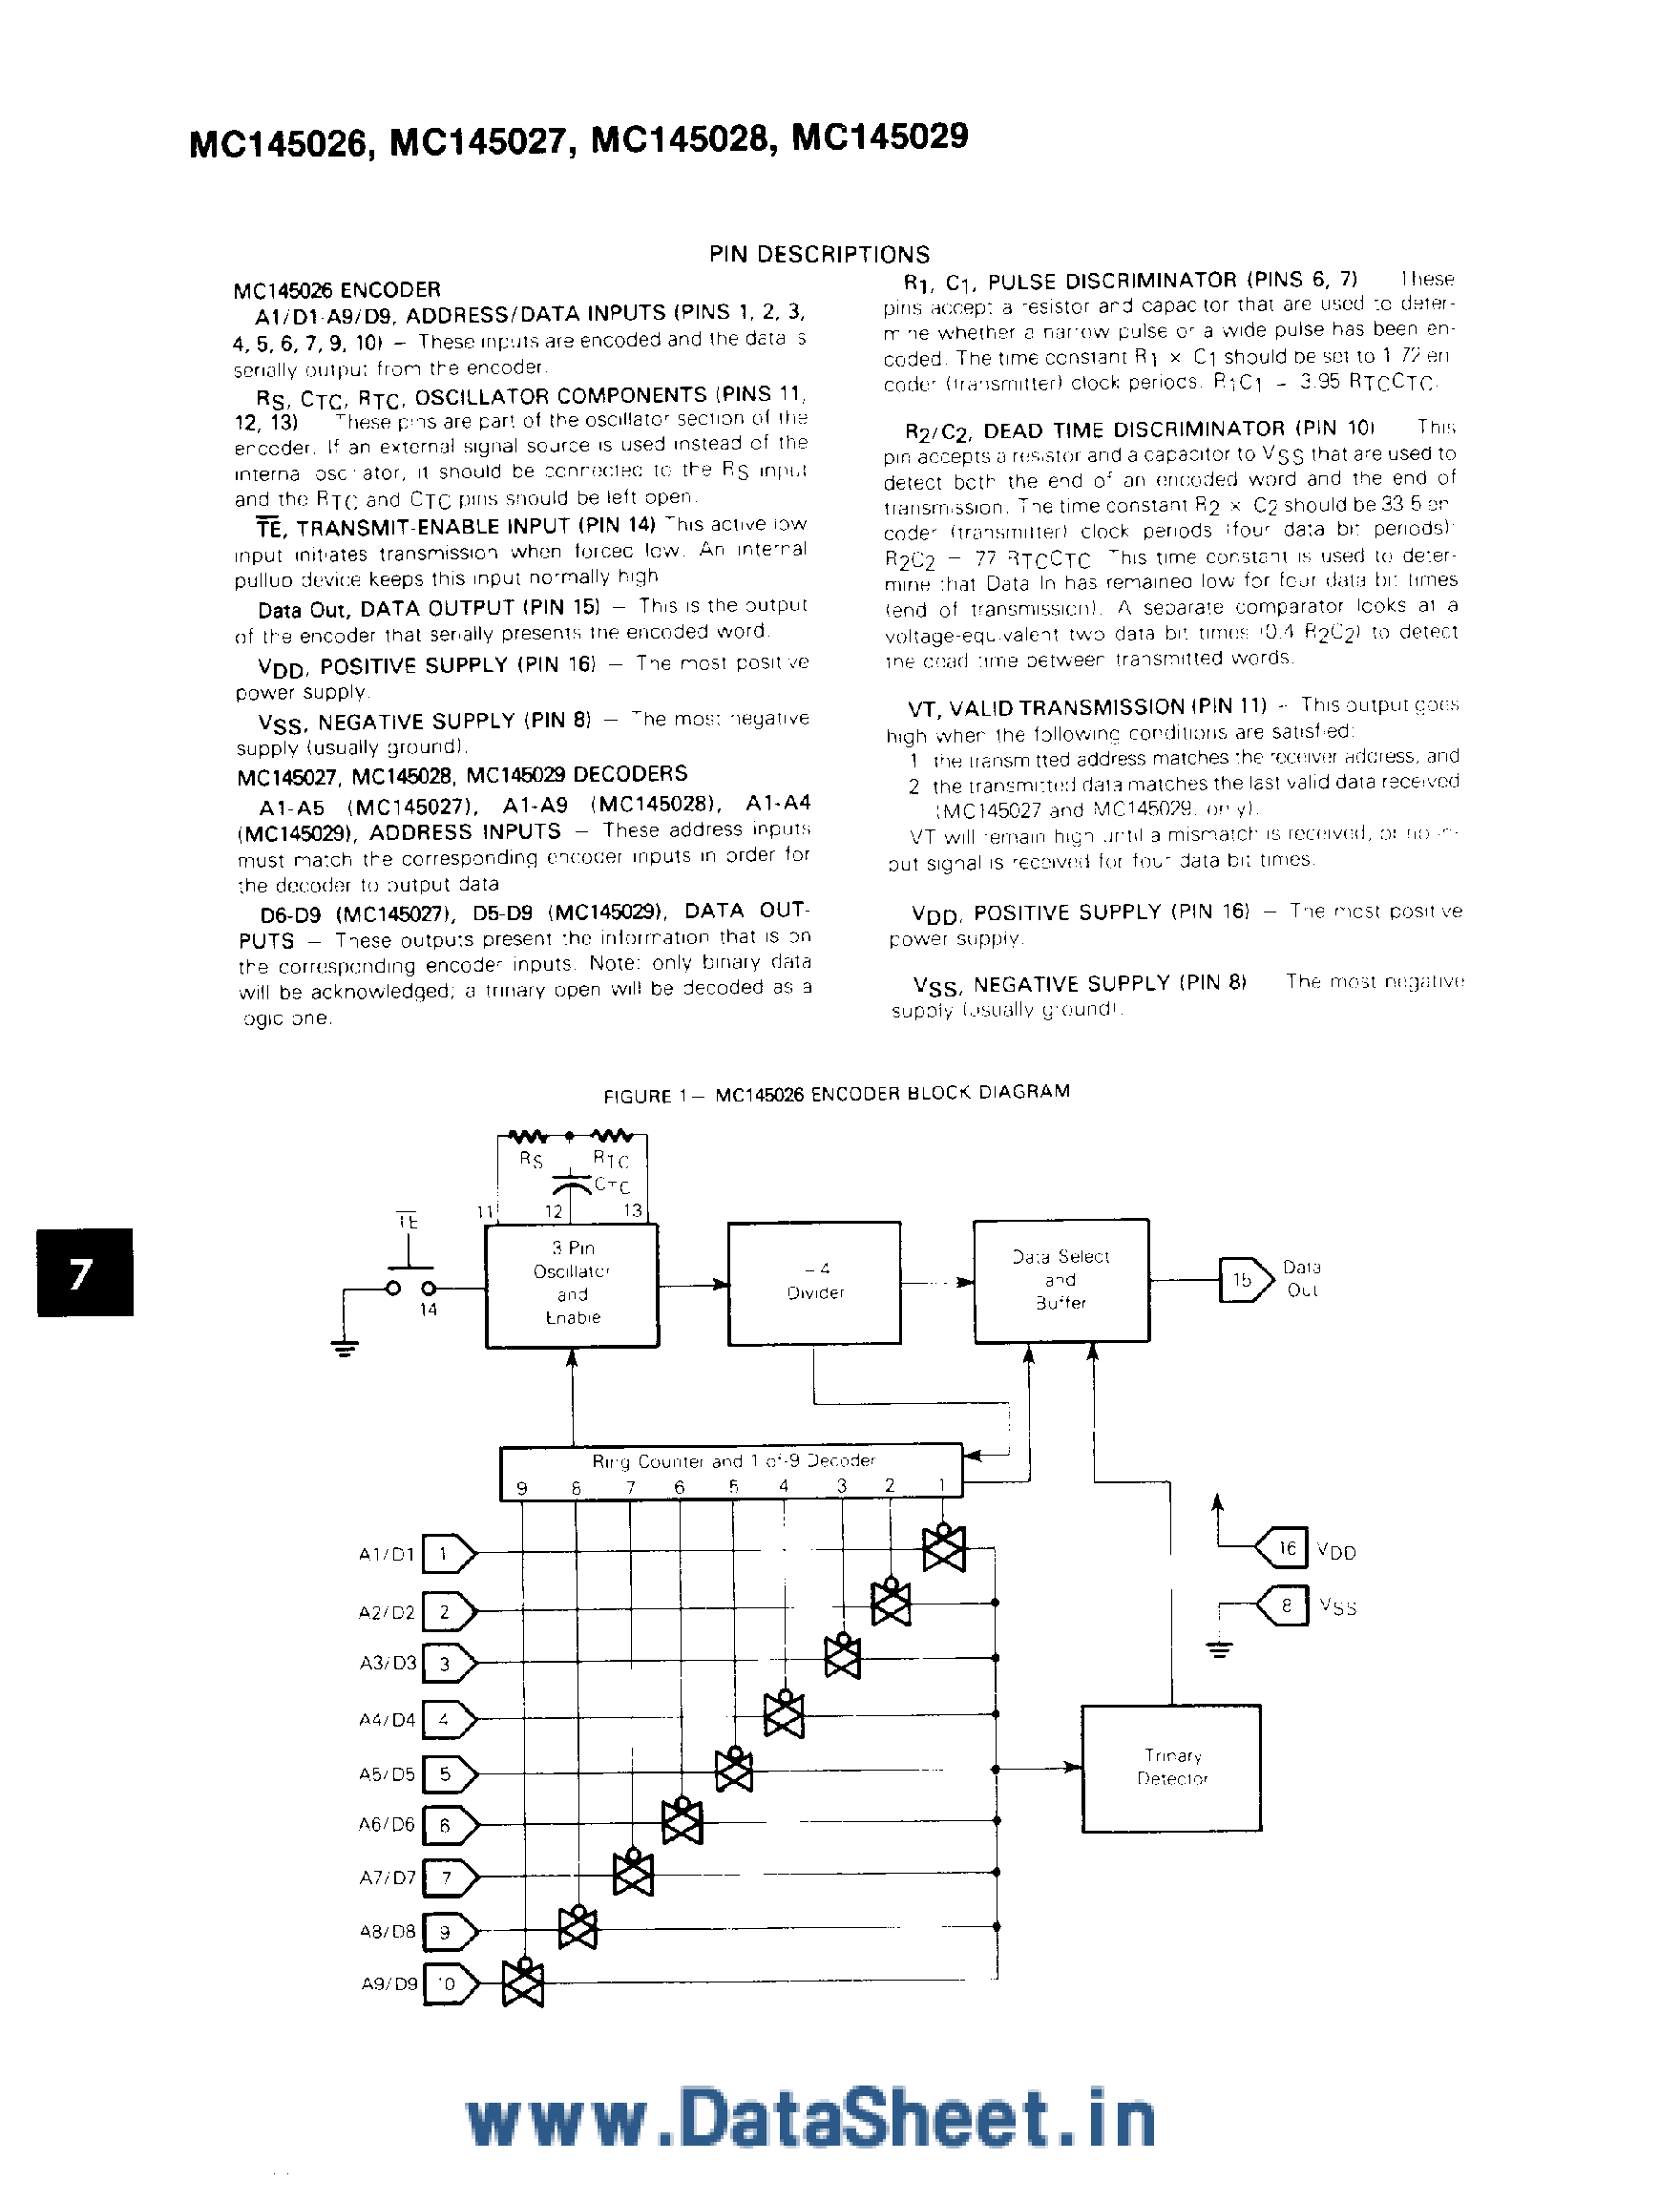 Datasheet MC14457 - (MC14457 / MC14458) REMOTE-CONTROL TRANSMITTER/ENCODER page 1